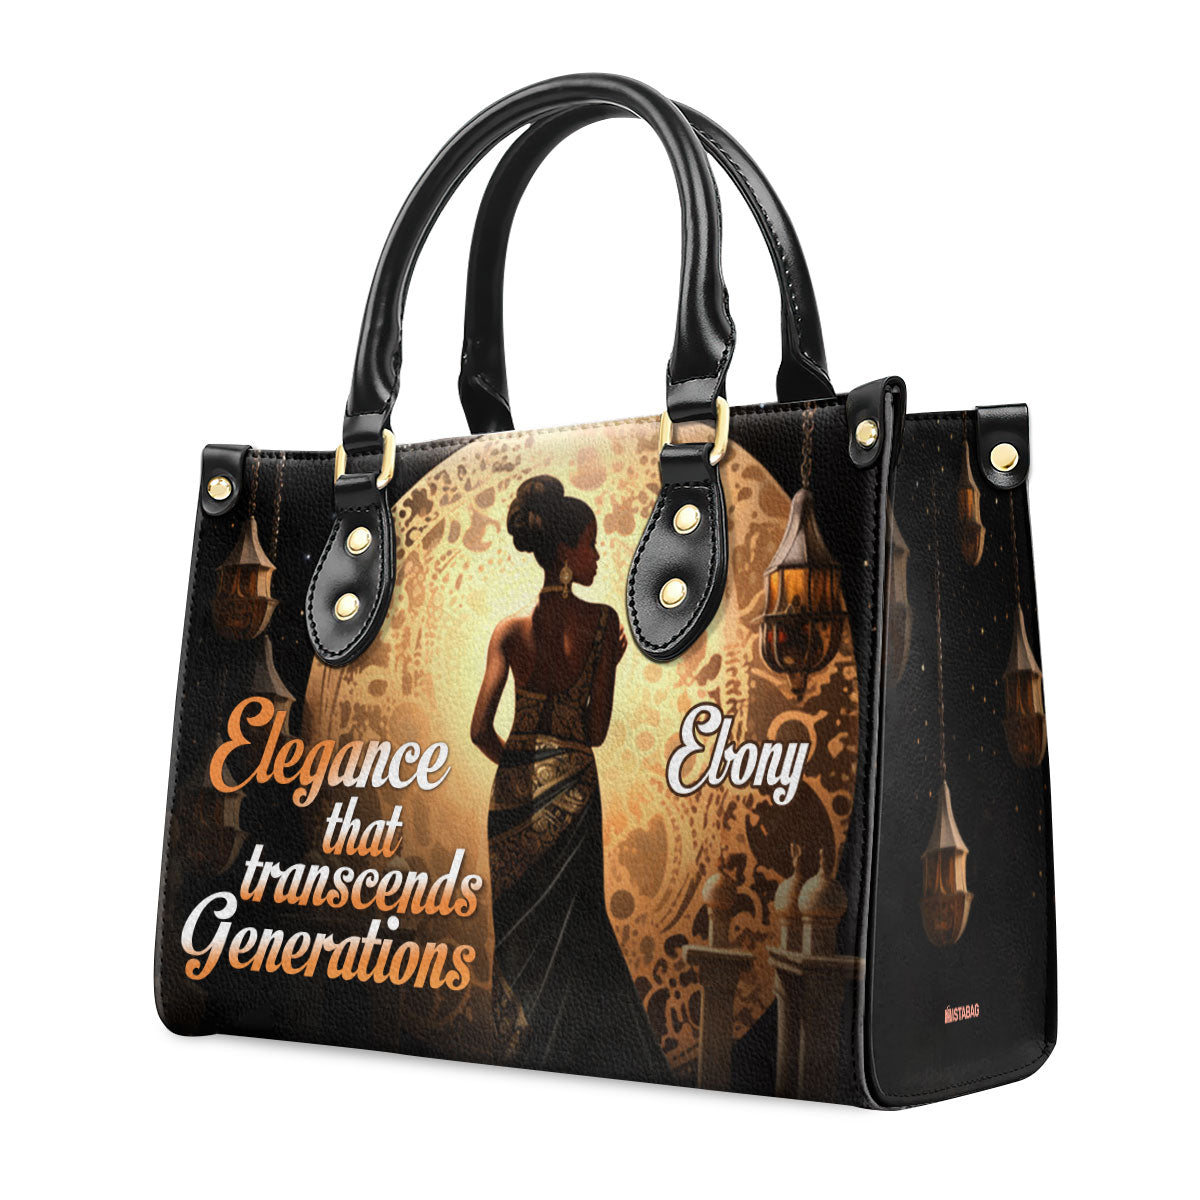 Elegance That Transcends Generations1 - Personalized Leather Handbag SB307a